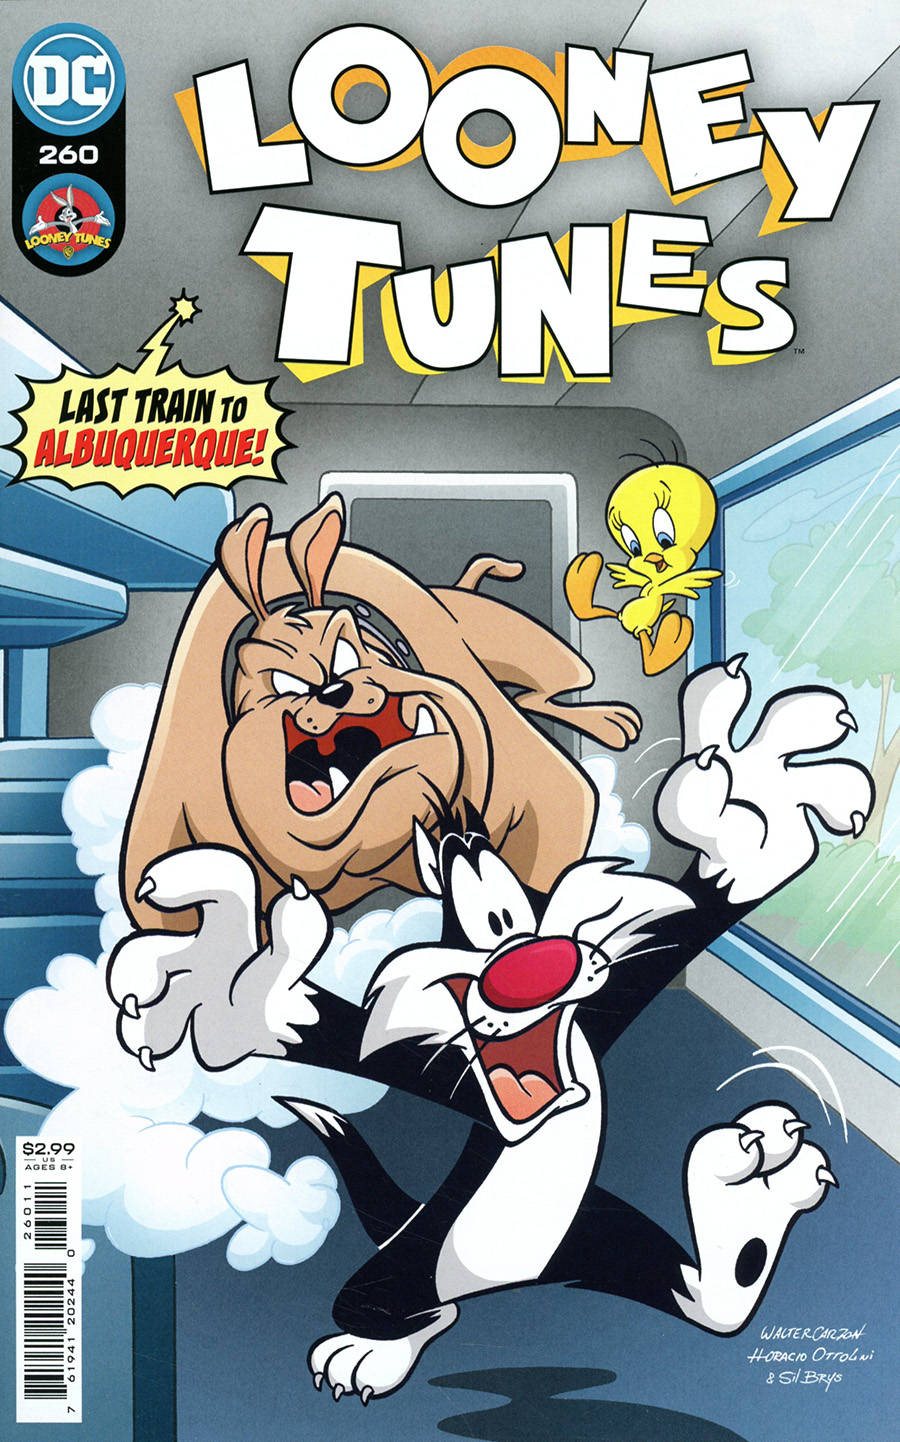 Looney Tunes Vol 3 #260